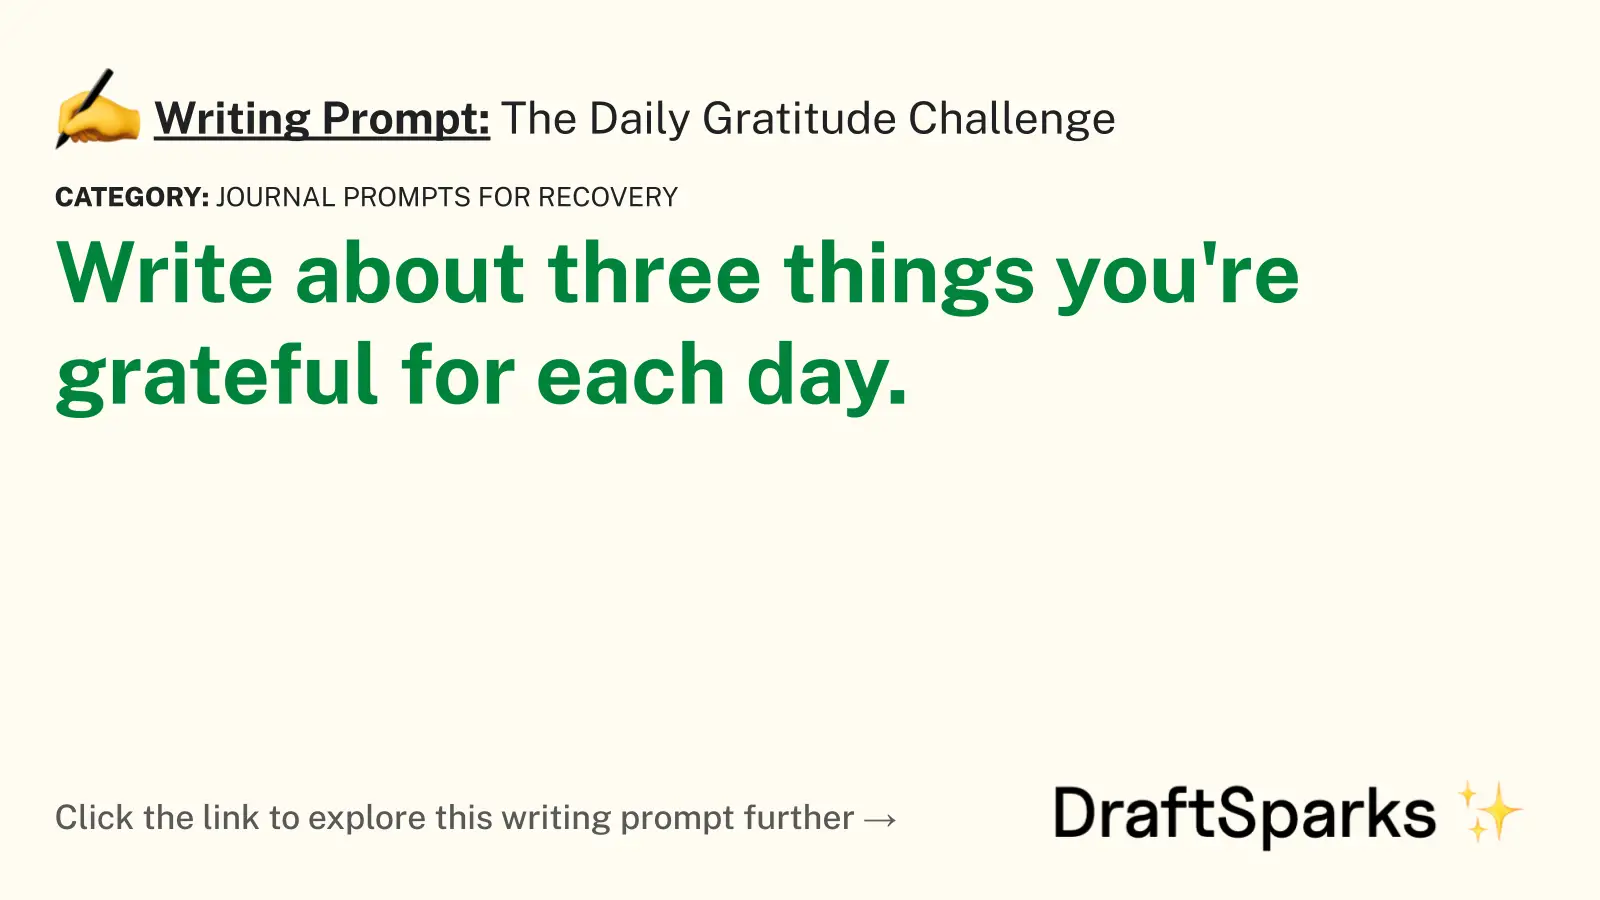 The Daily Gratitude Challenge